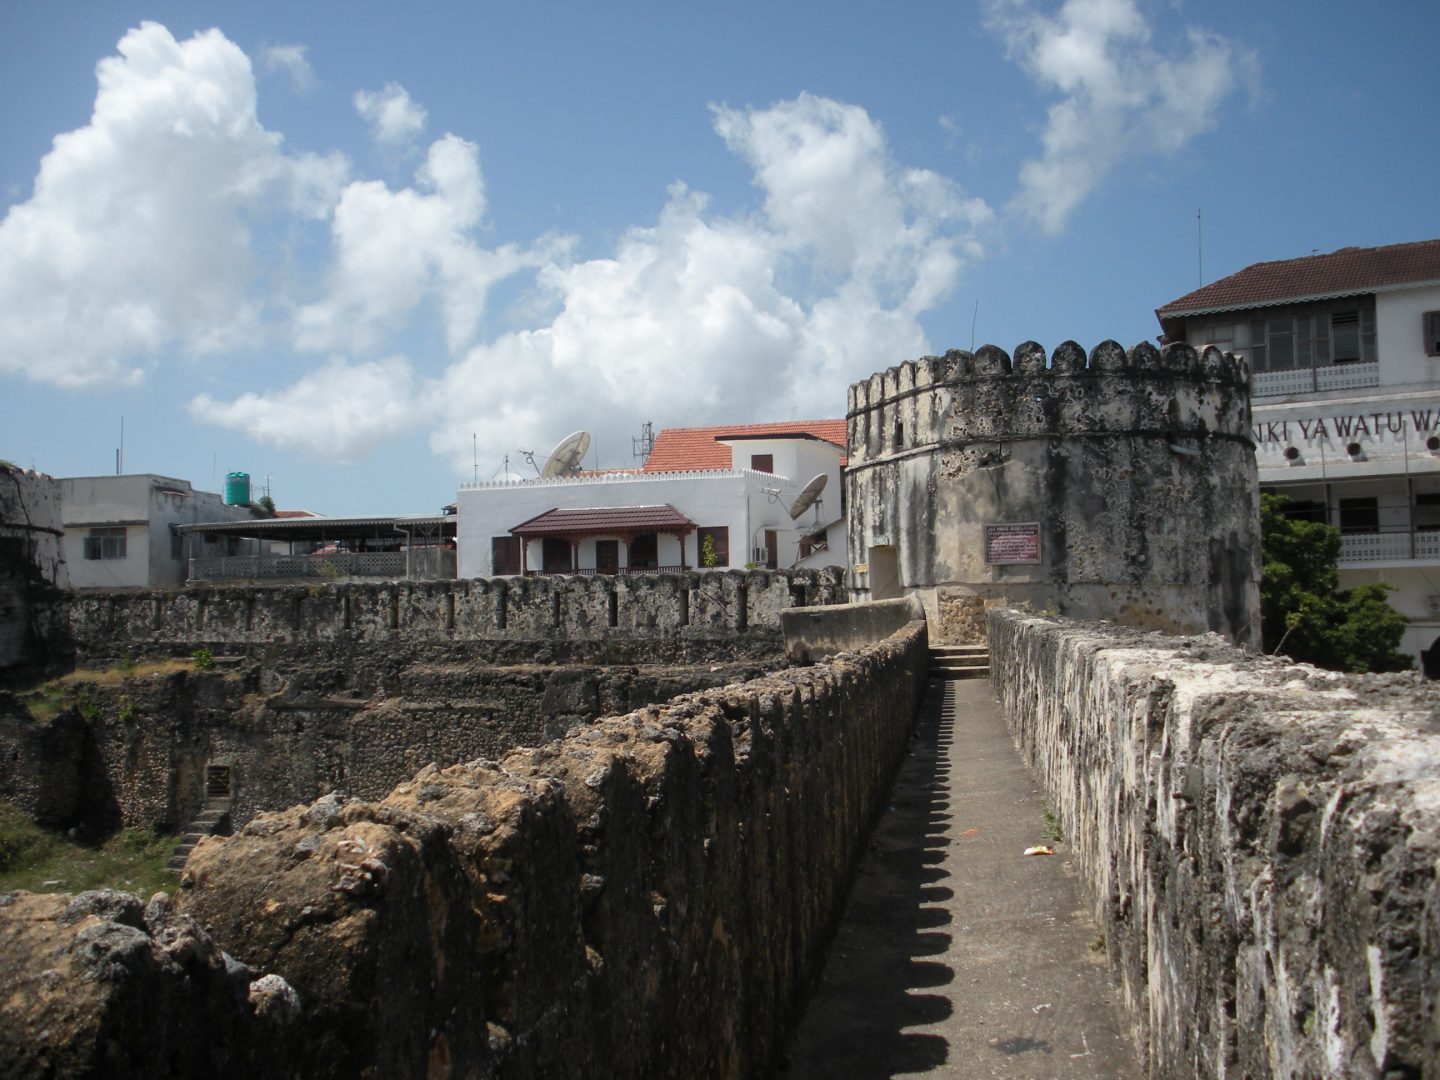 Old Fort of Zanzibar, Unguja, Zanzibar